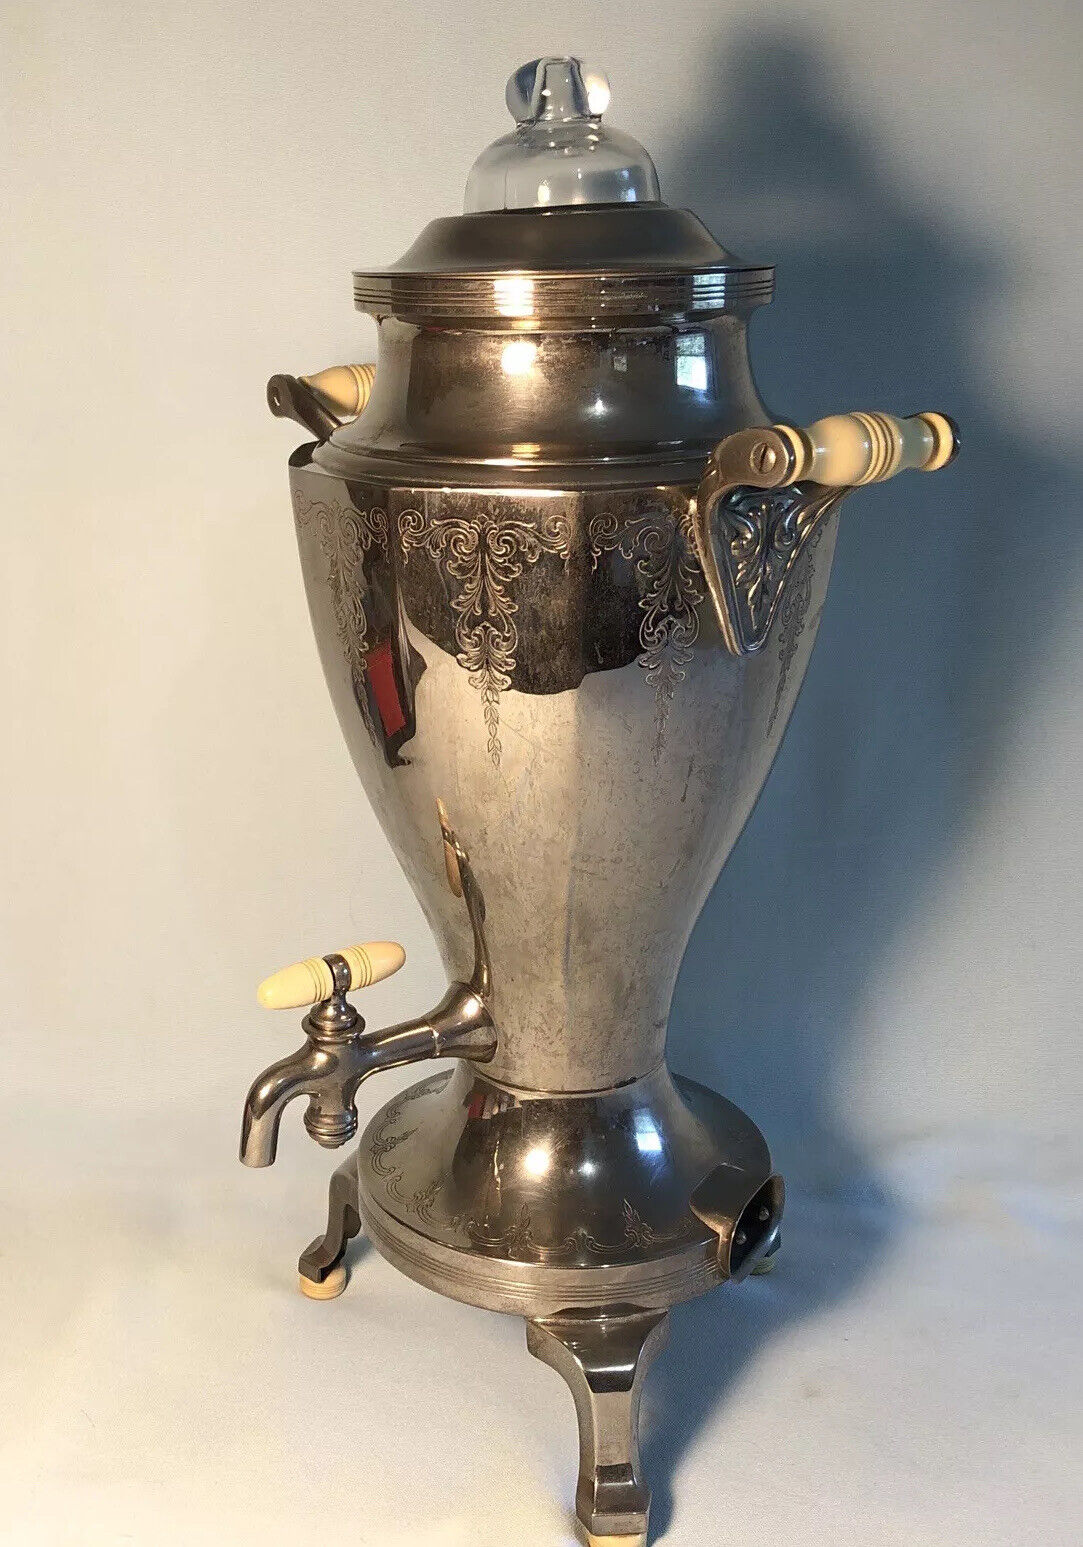 UNIVERSAL Silver Plate Coffee Percolator Landers Frary&Clark  #9269 Pat. 1912